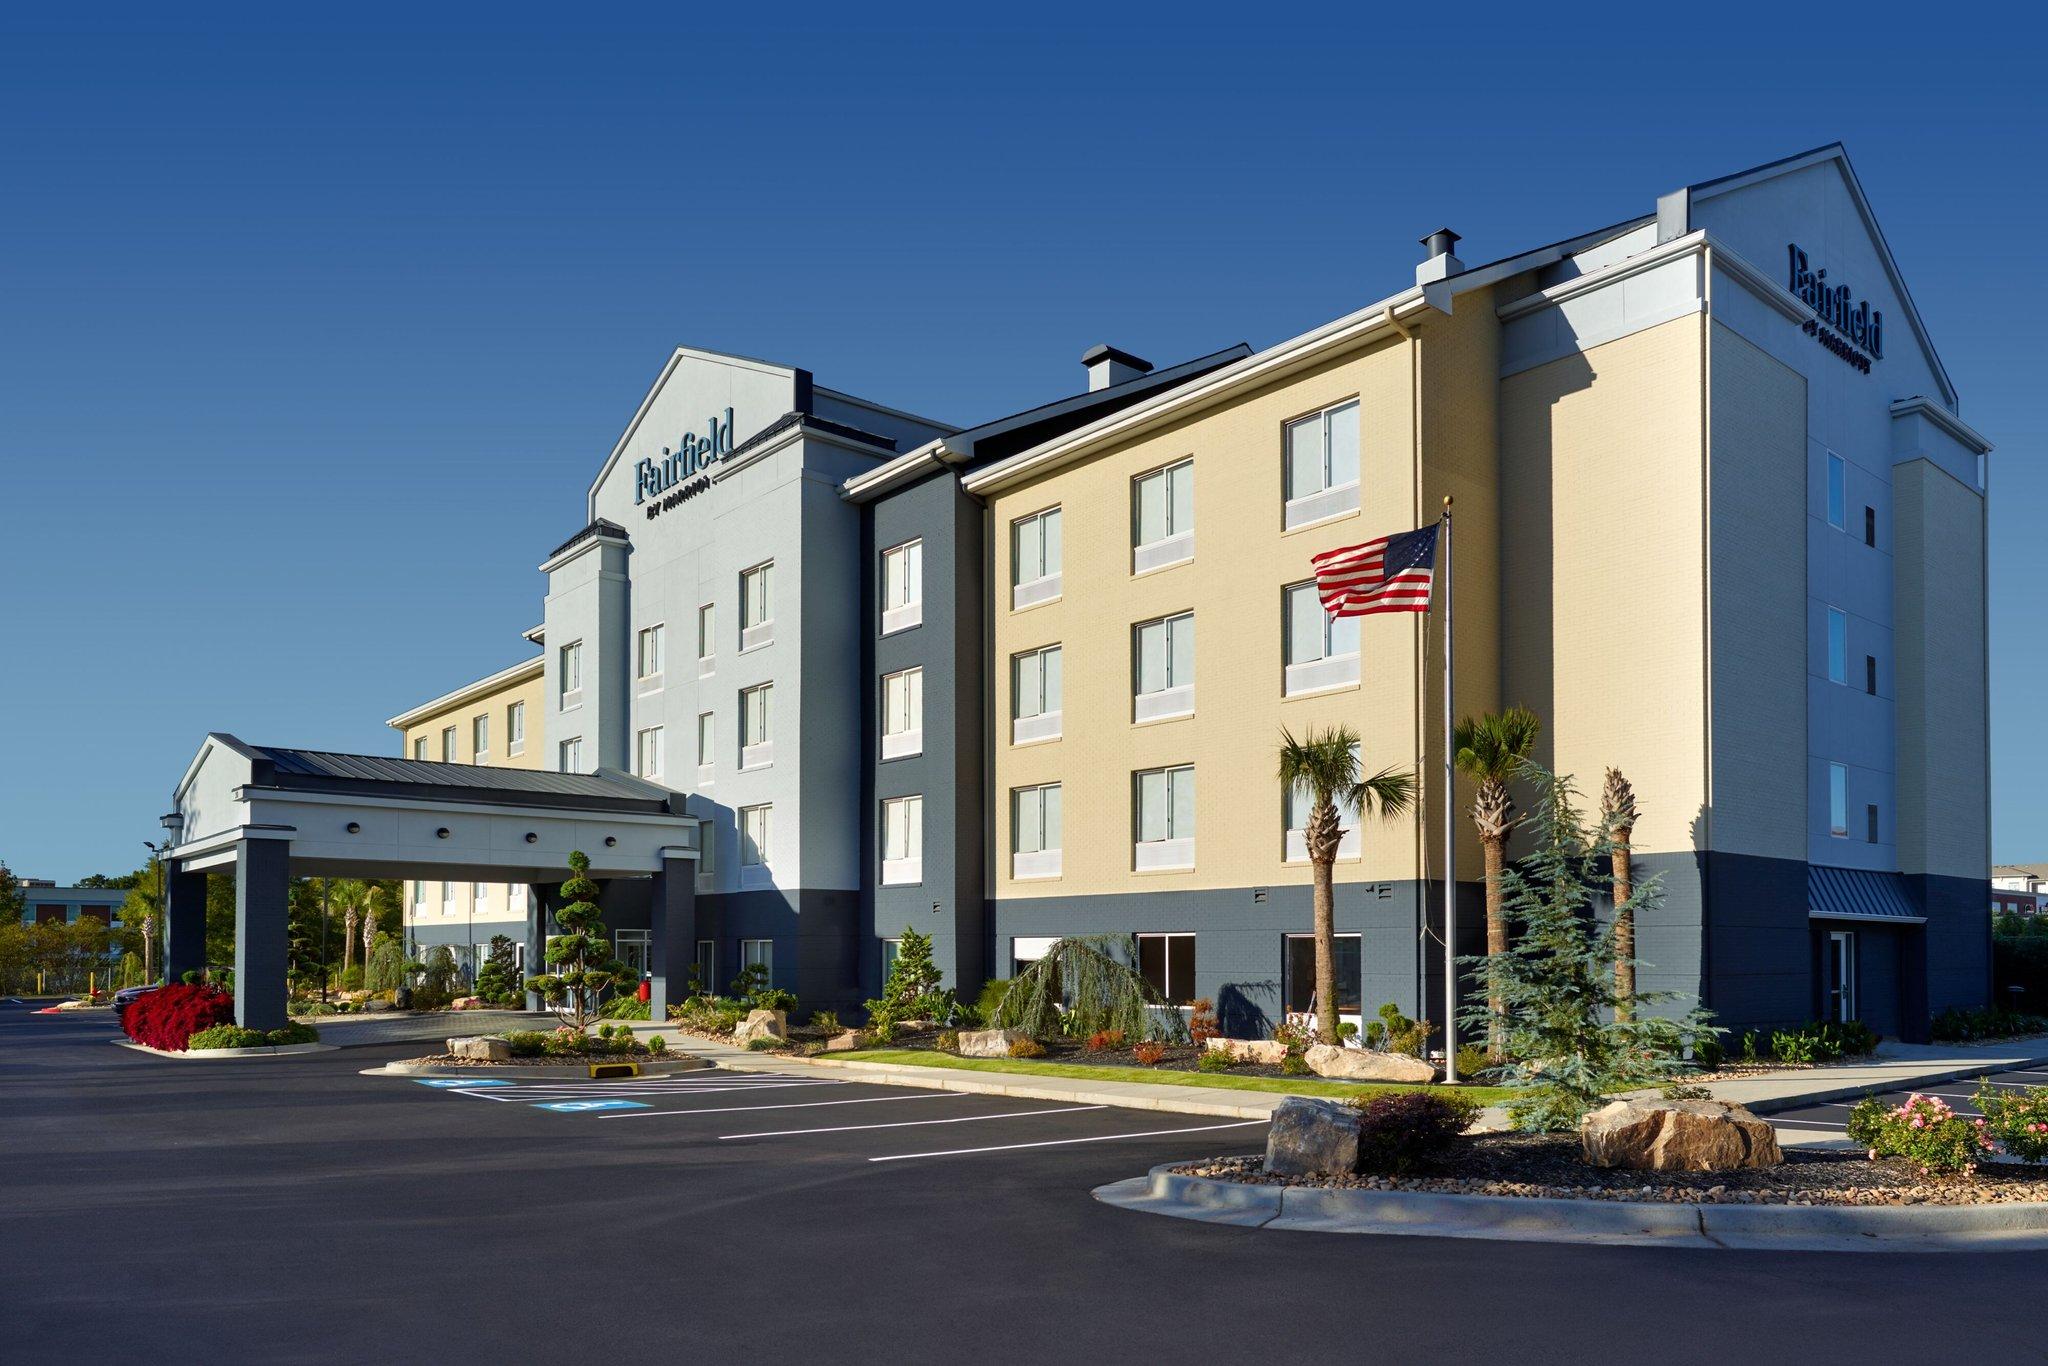 Fairfield Inn & Suites Atlanta McDonough in McDonough, GA